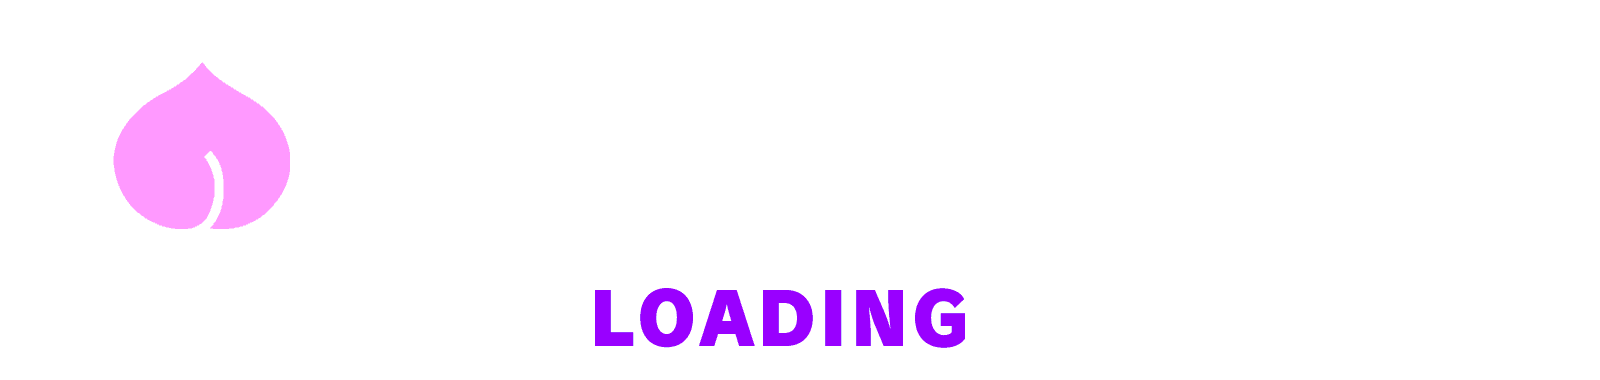 Loading...